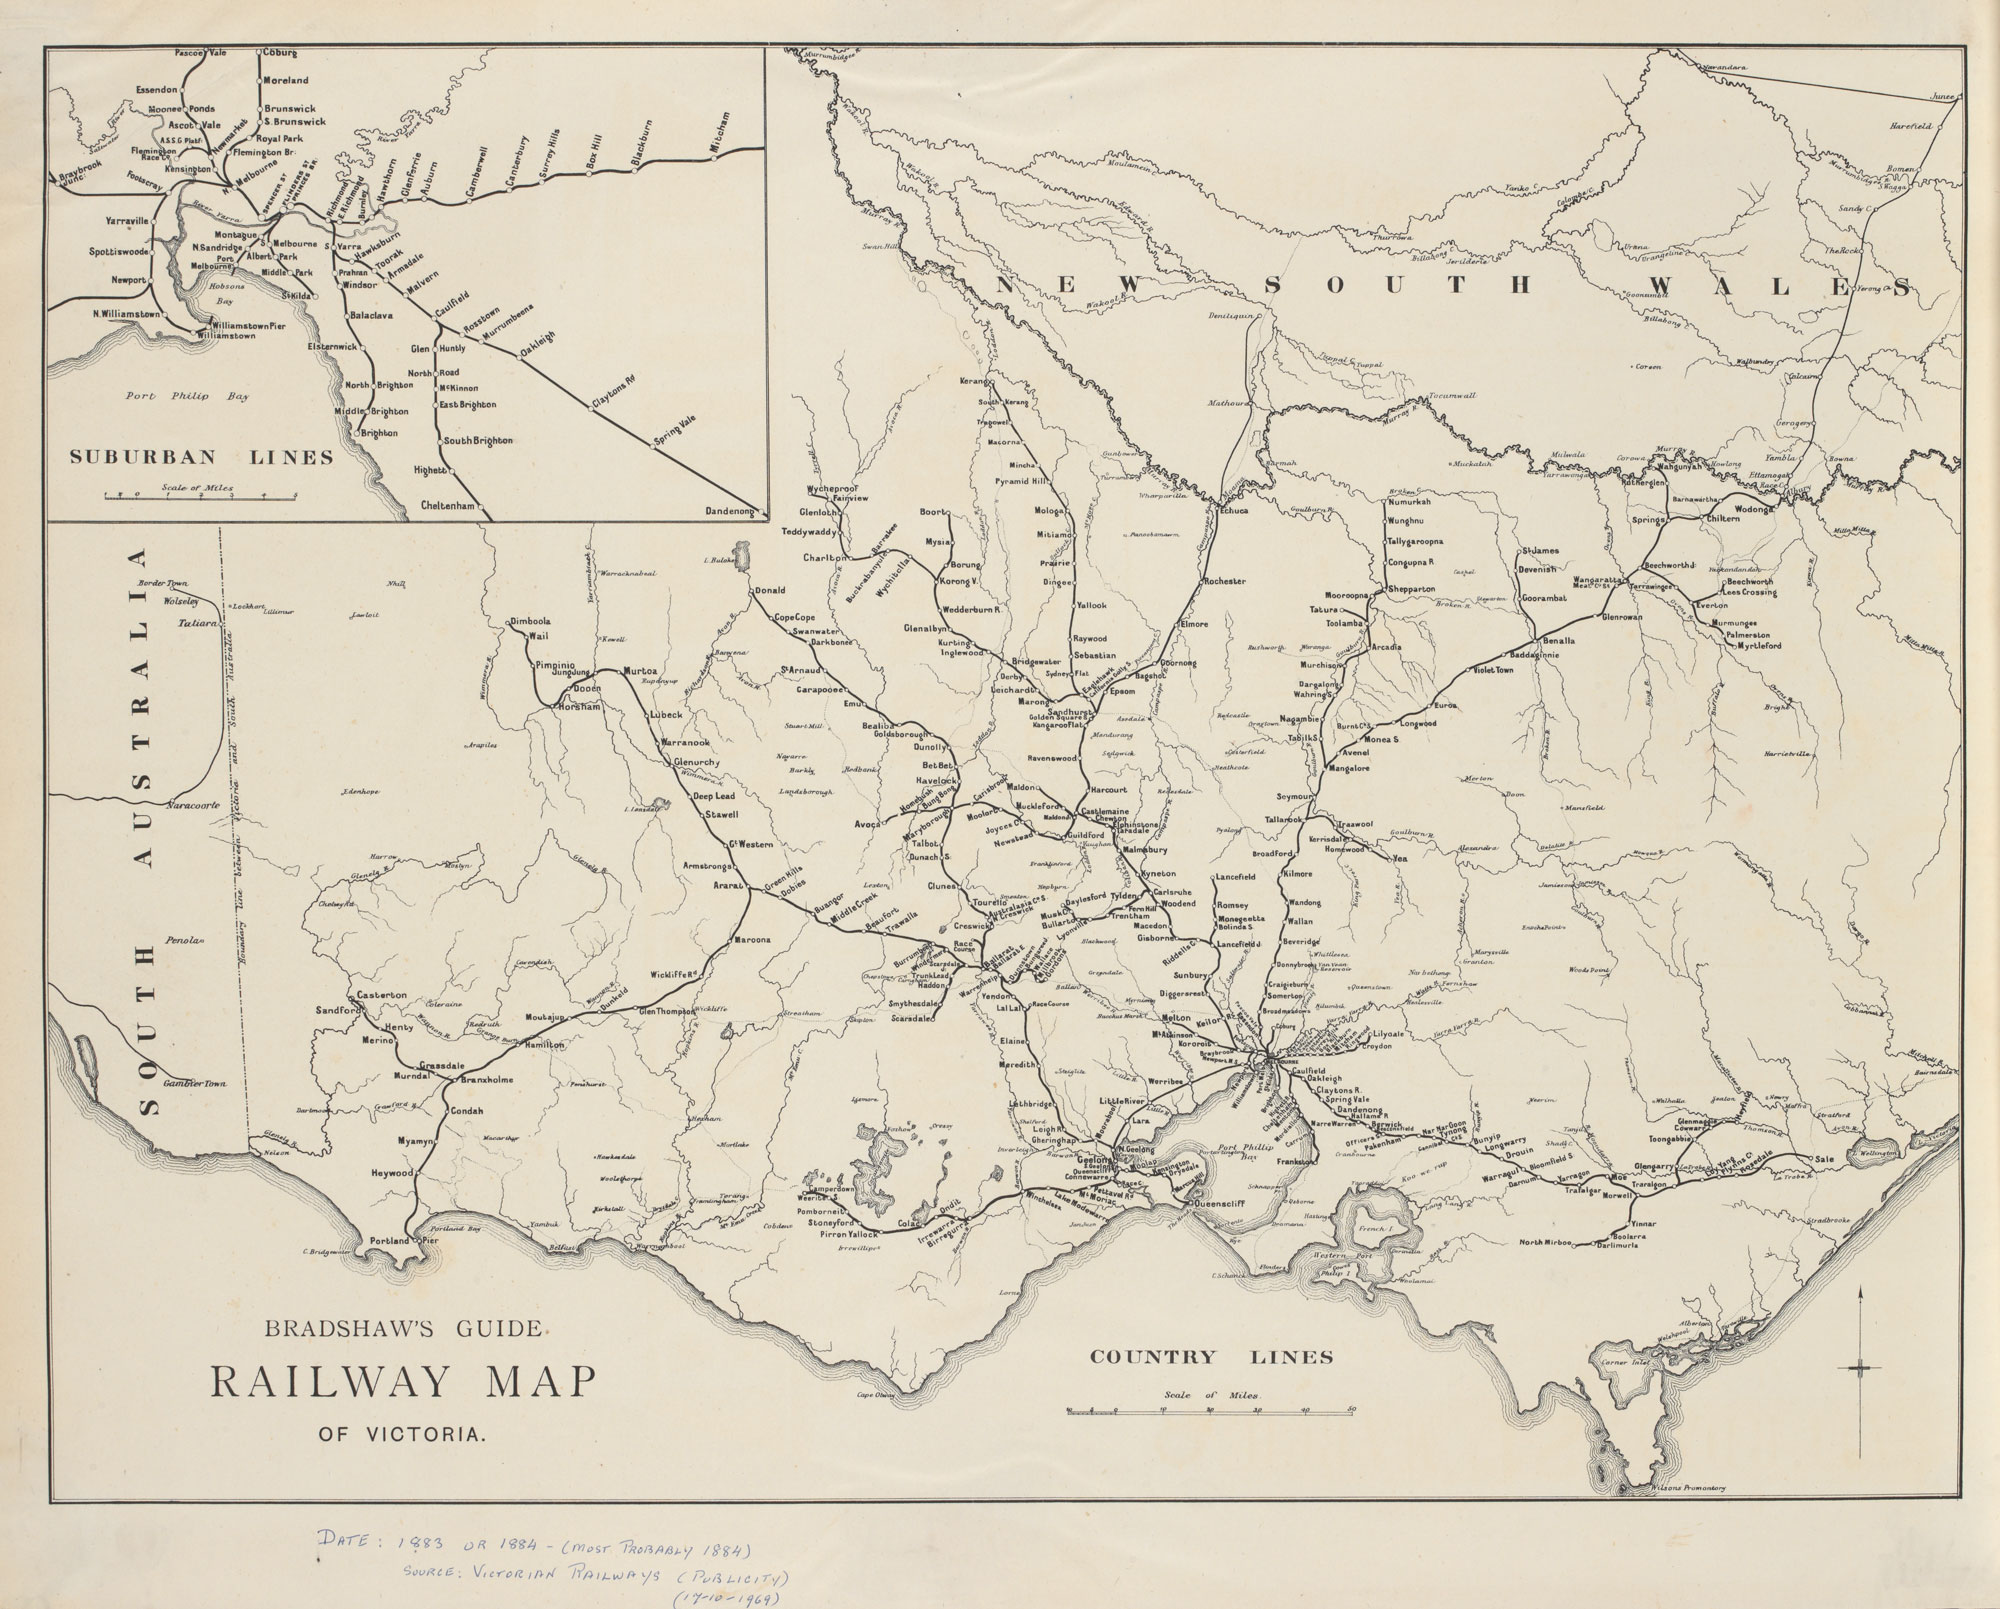 Bradshaw’s Guide railway map of Victoria, 1884.